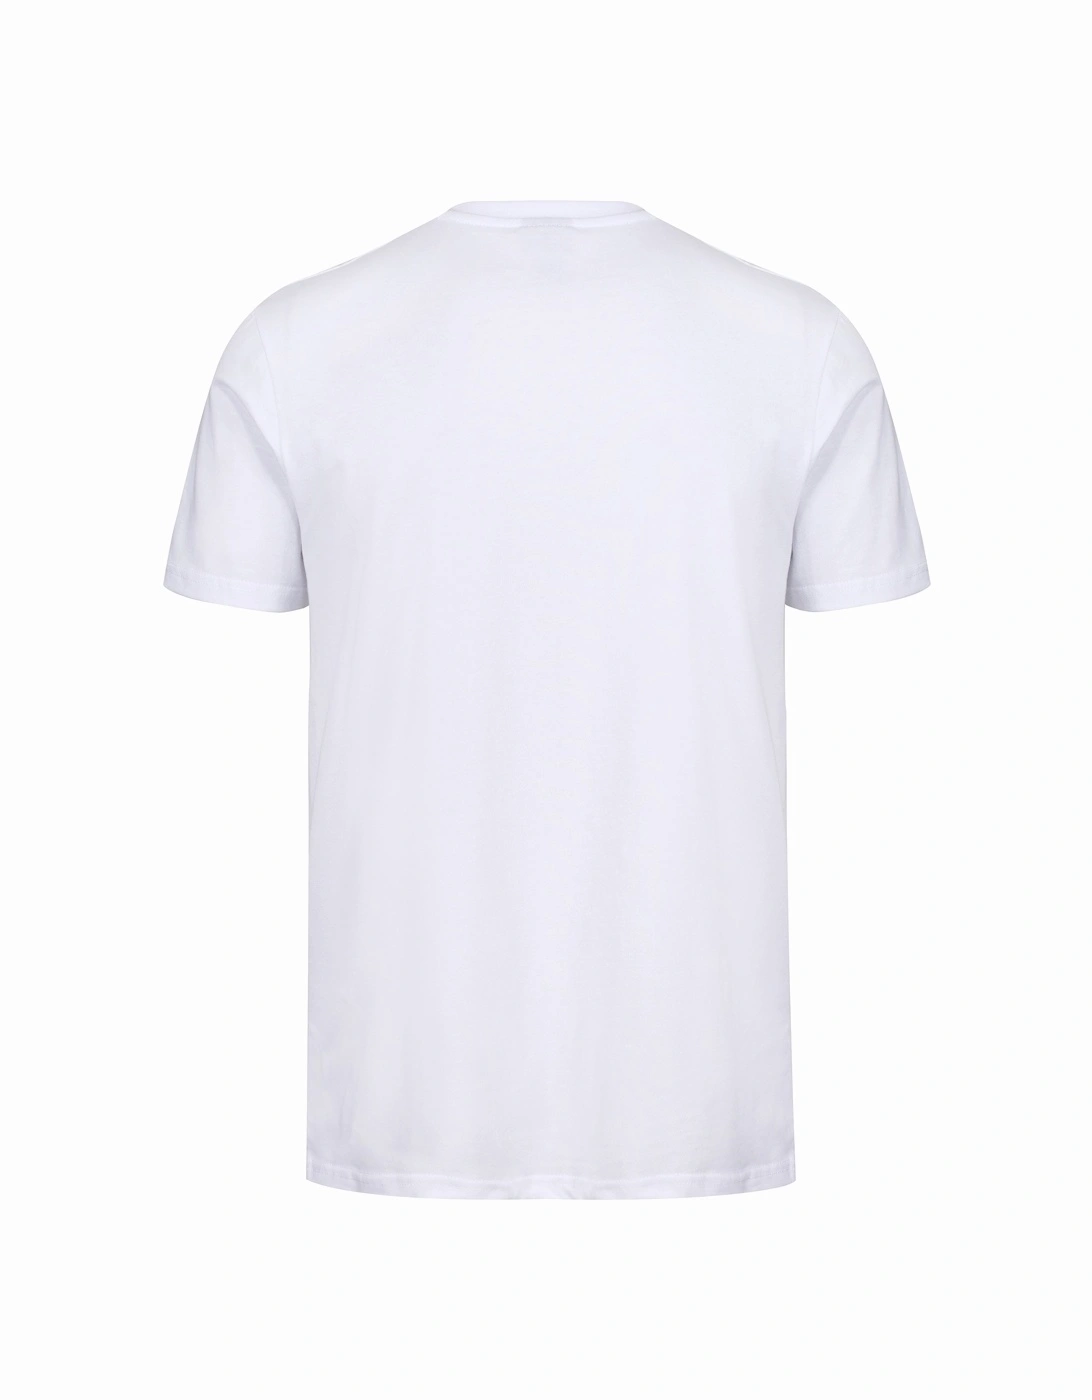 Fellion T-Shirt | White